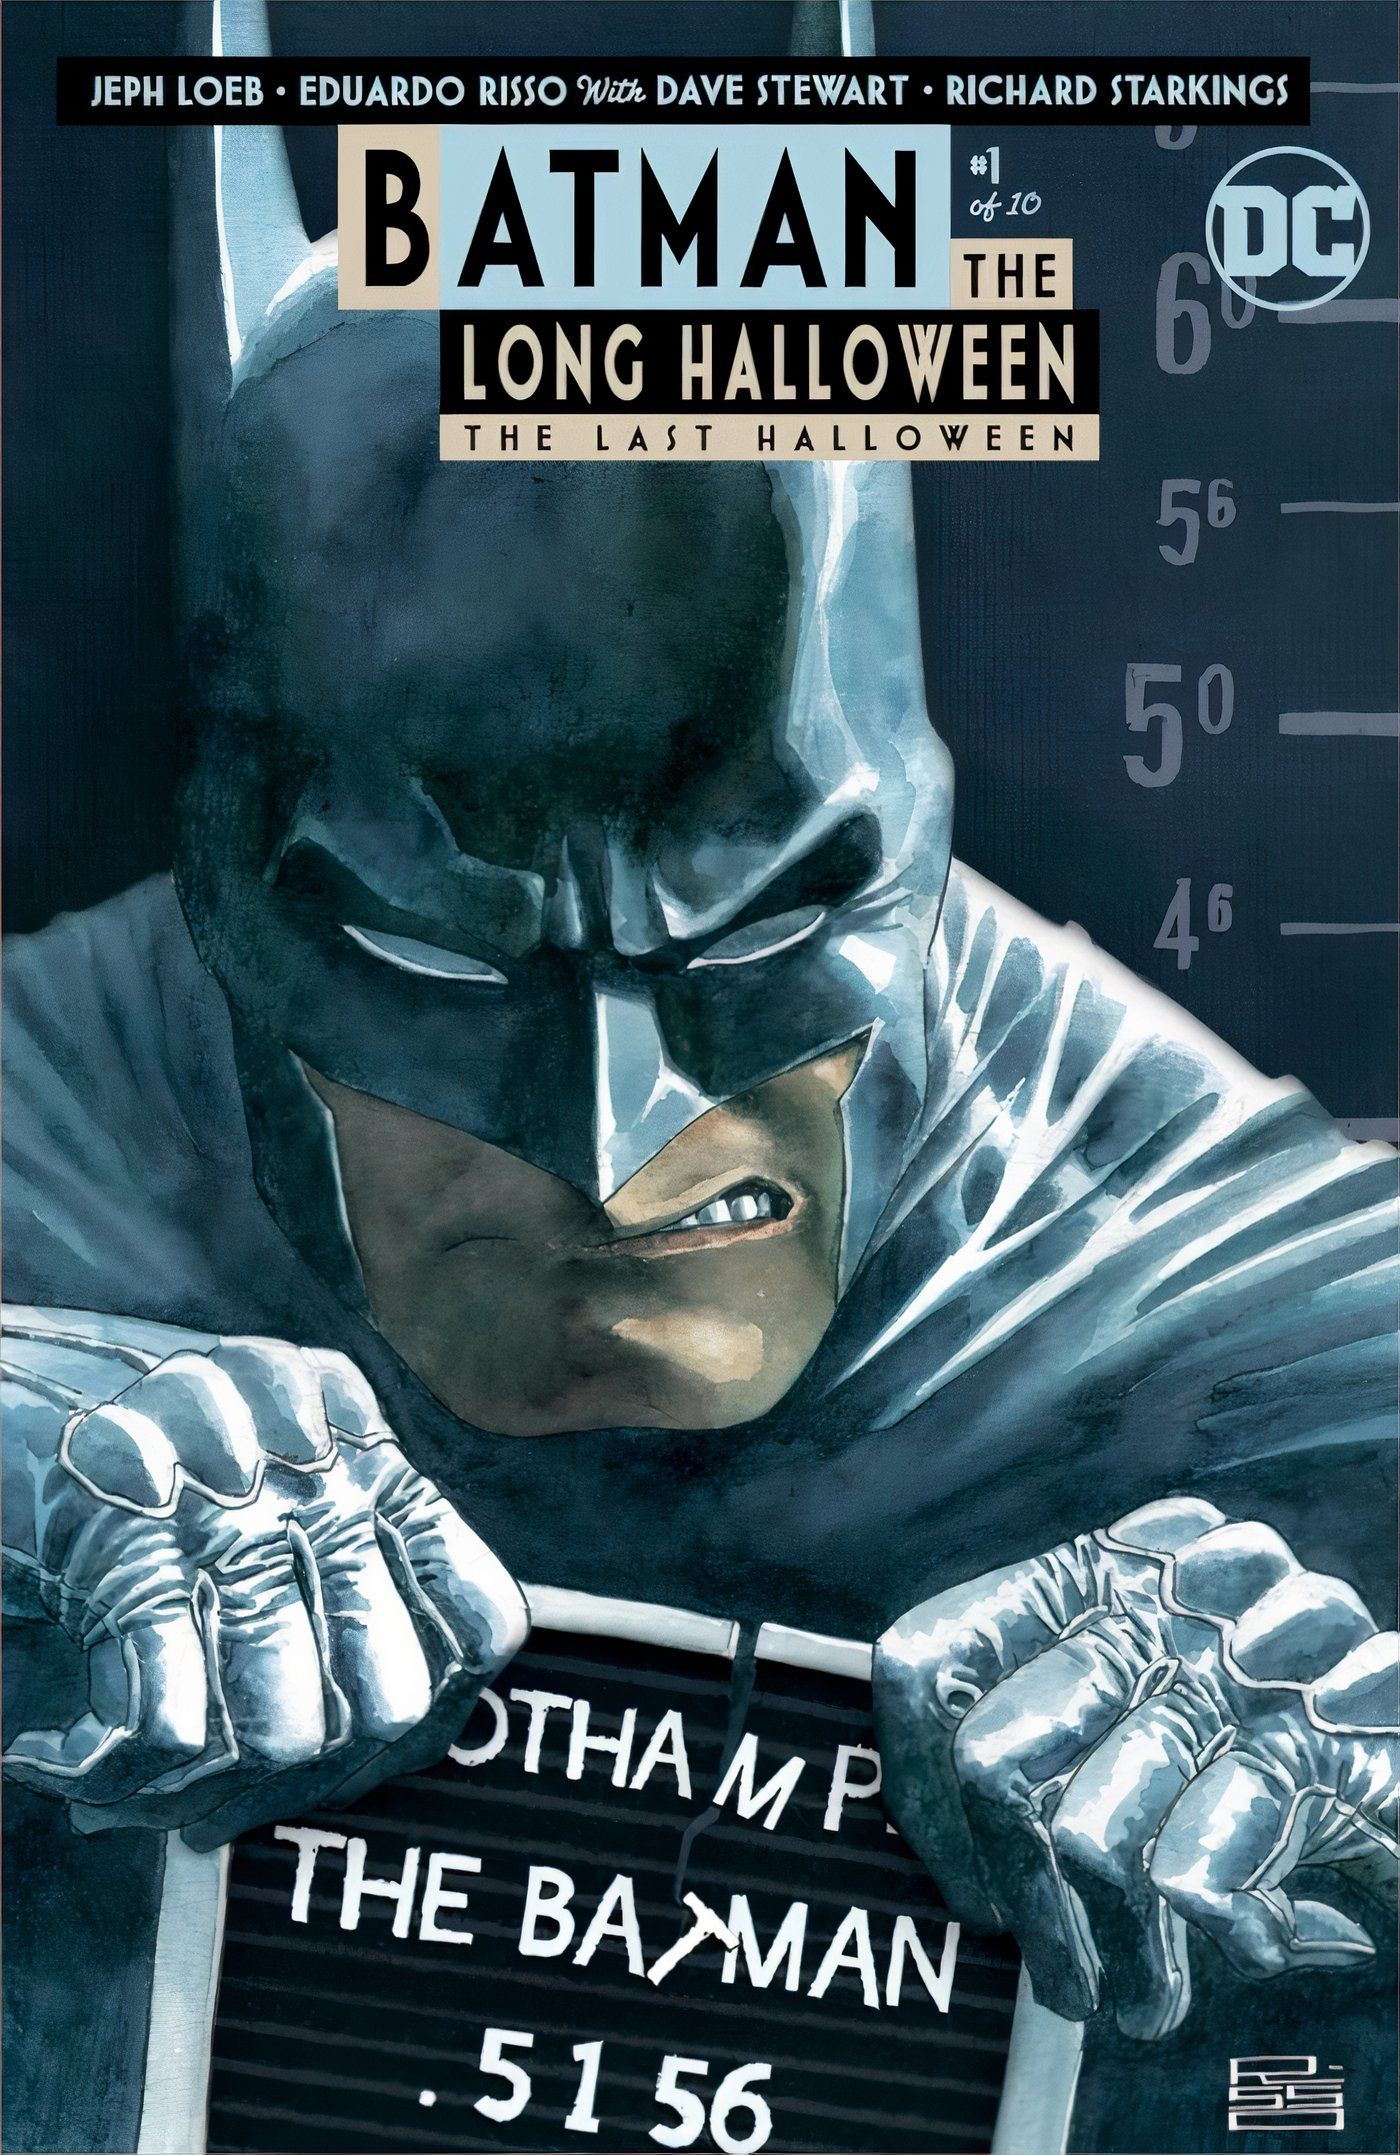 Batman The Long Halloween The Last Halloween #1 Cover by Eduardo Risso